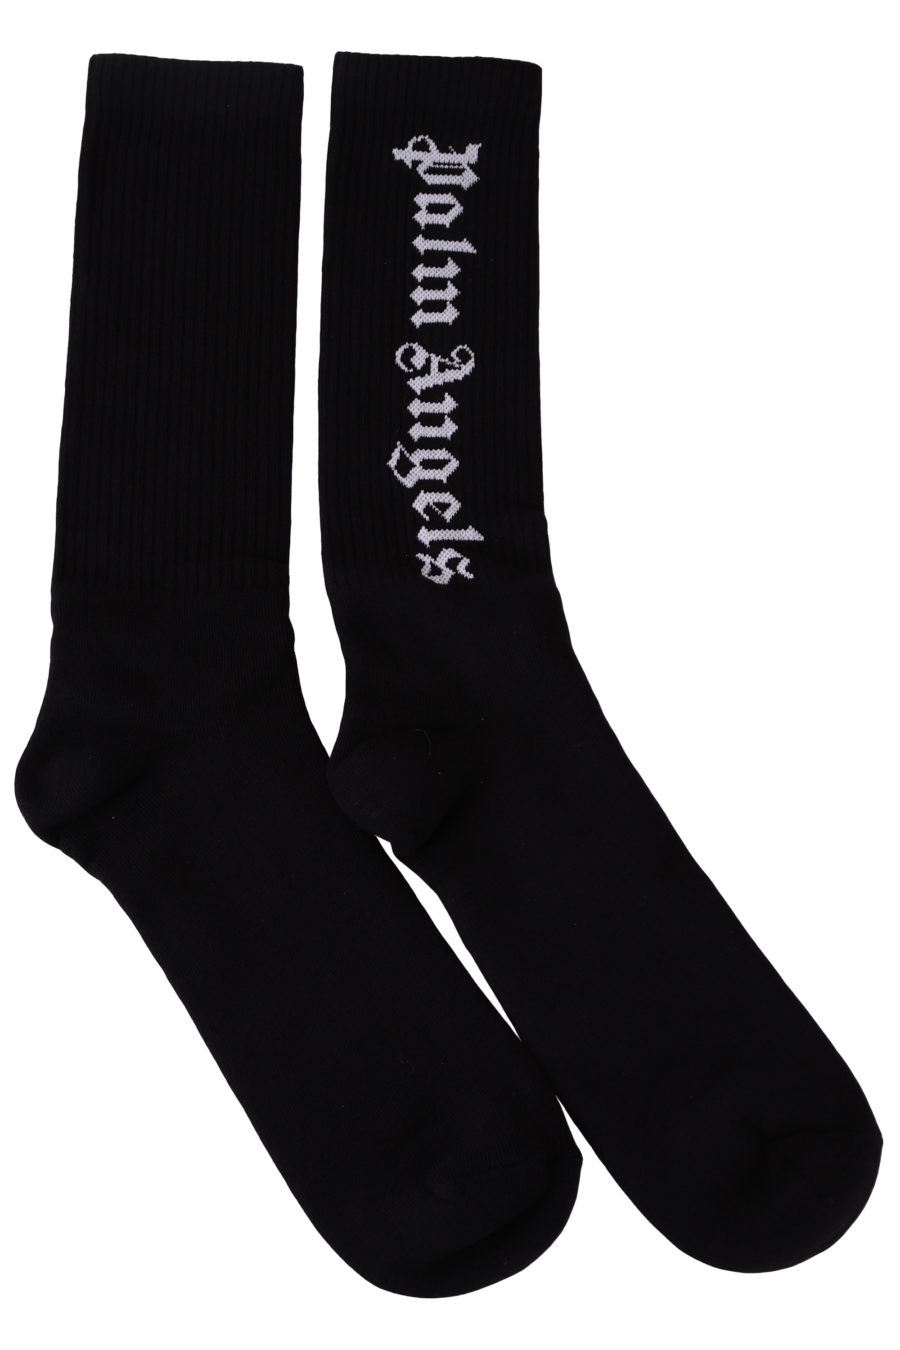 Calcetines negros con logo blanco vertical - IMG 2399